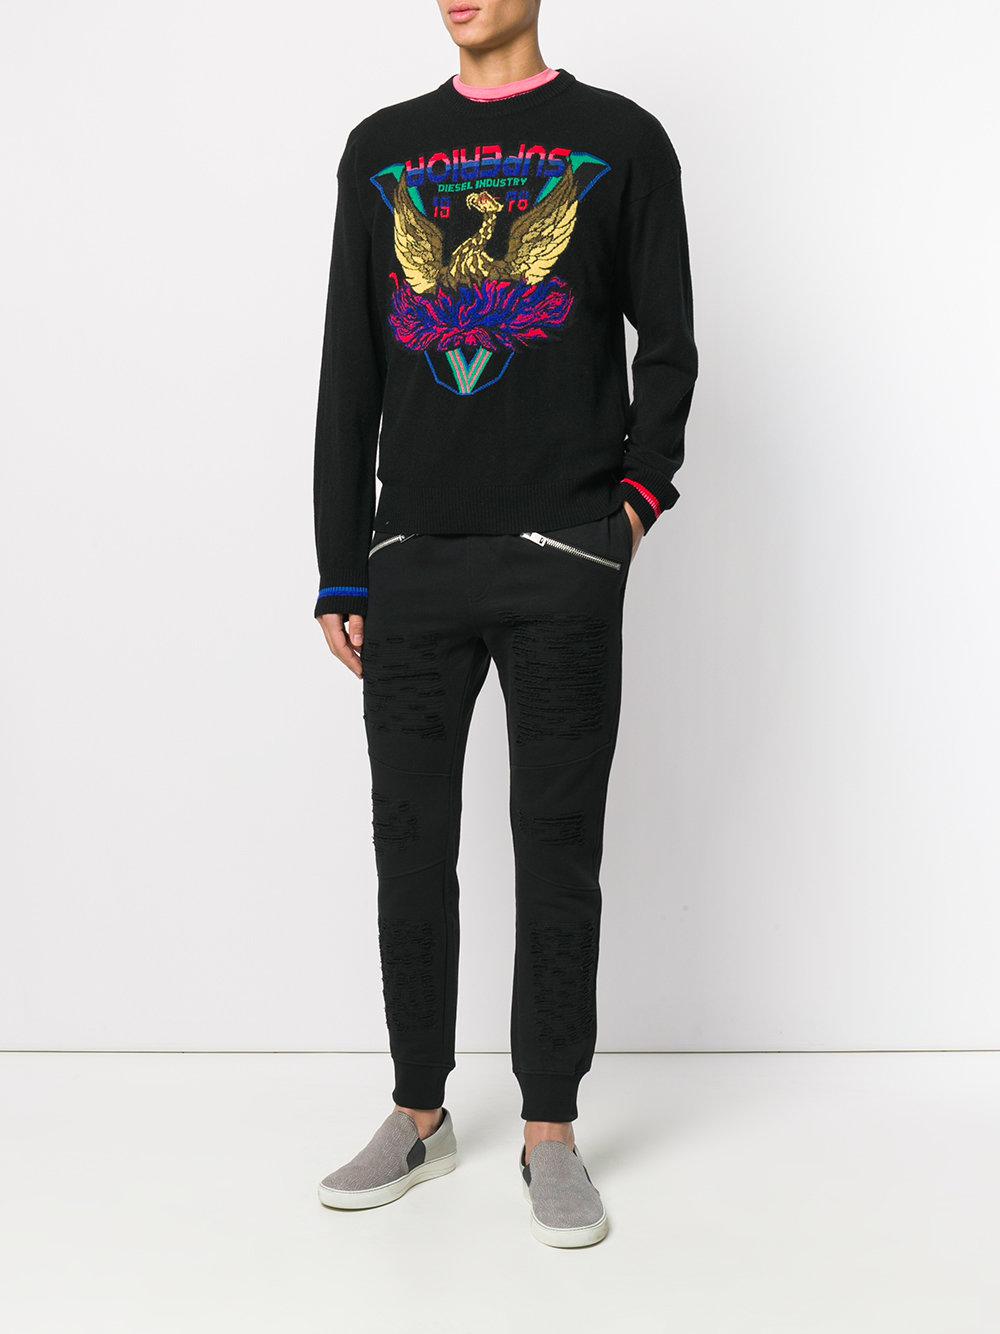 DIESEL Denim Superior Eagle Patch Sweater in Black for Men - Lyst